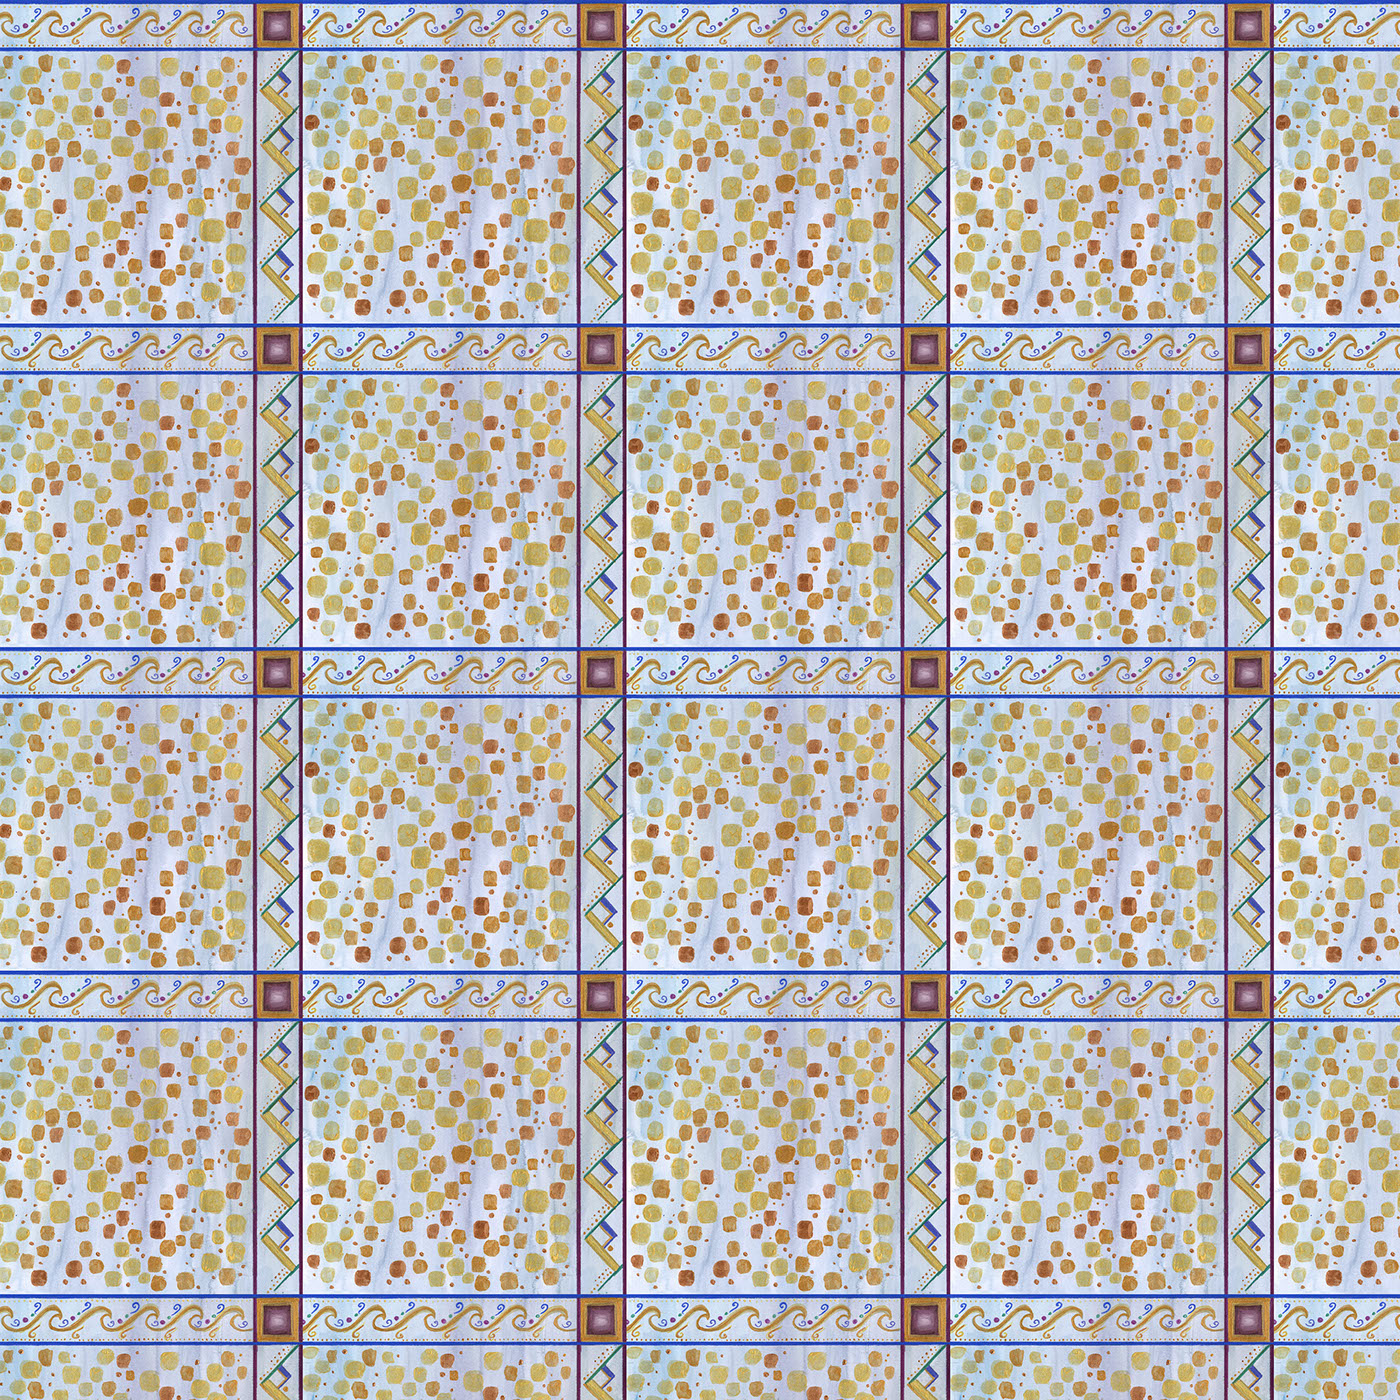 Byzantine textile Patterns surface design pattern design  print design 